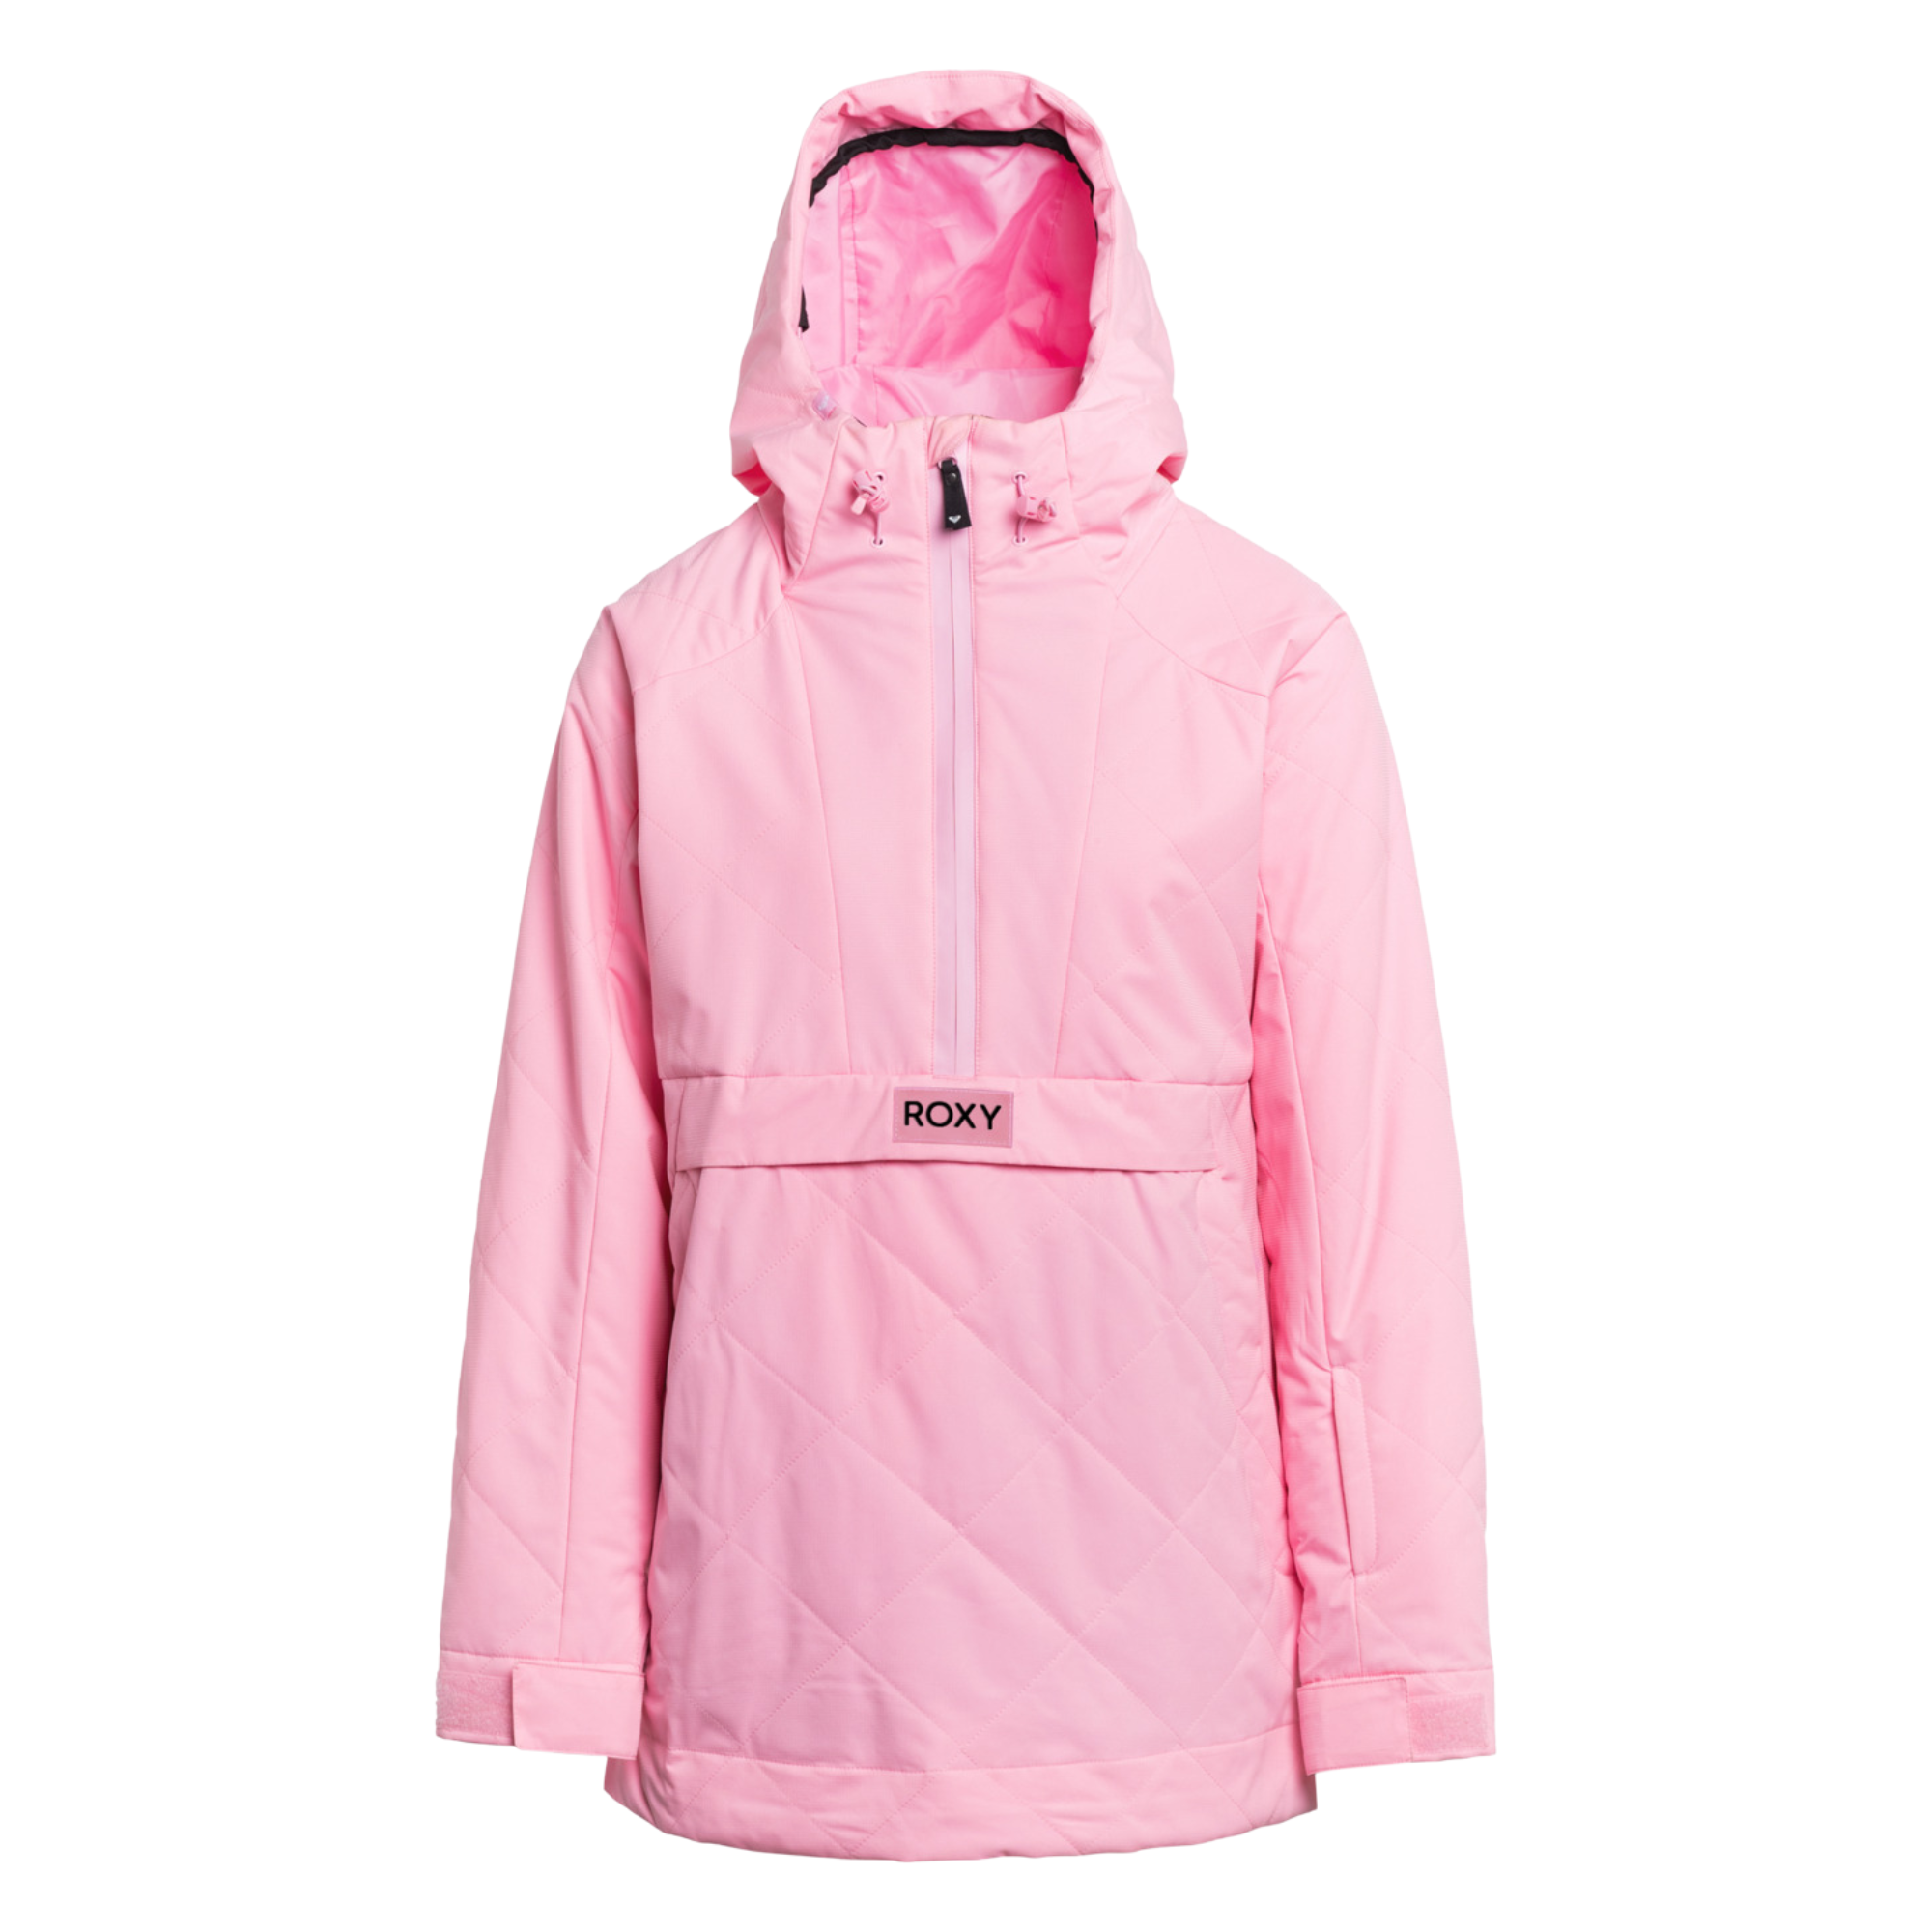 Roxy Women's Radiant Lines Overhead Jacket - Pink Frosting